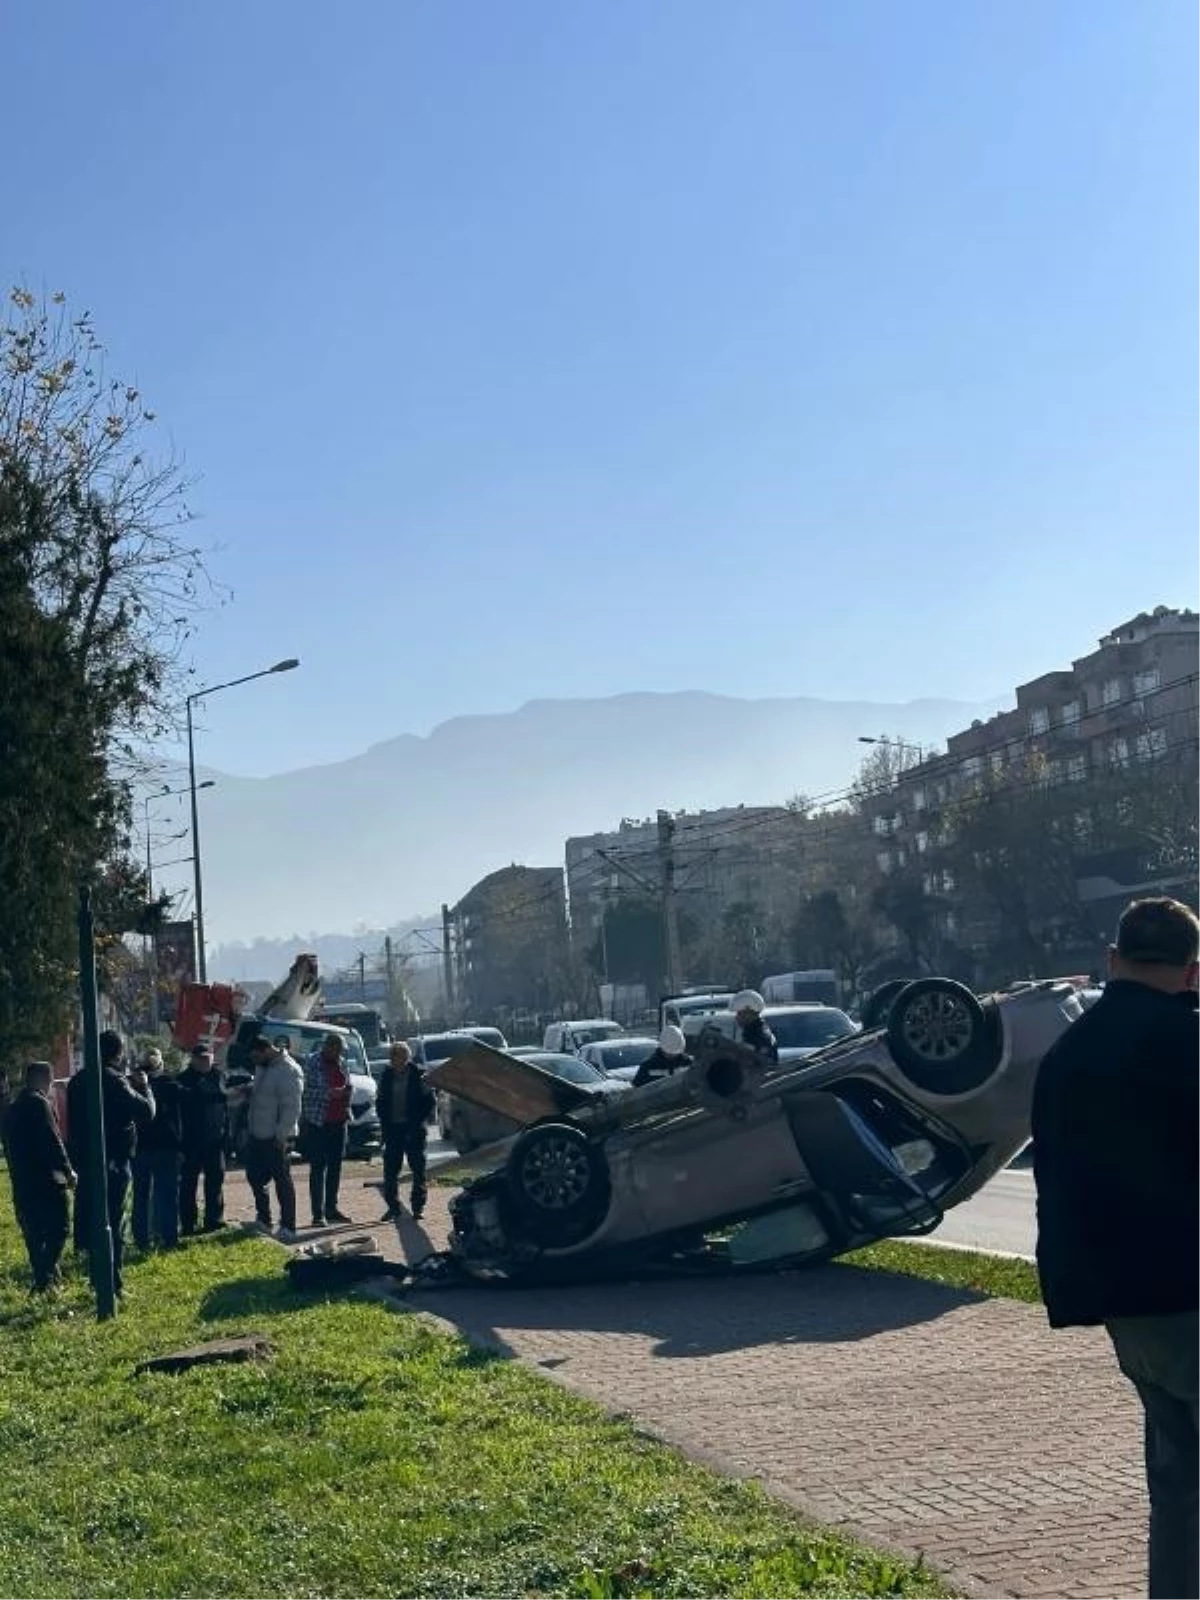 Bursa'da Otomobil Takla Attı, 3 Kişi Yara Almadan Kurtuldu